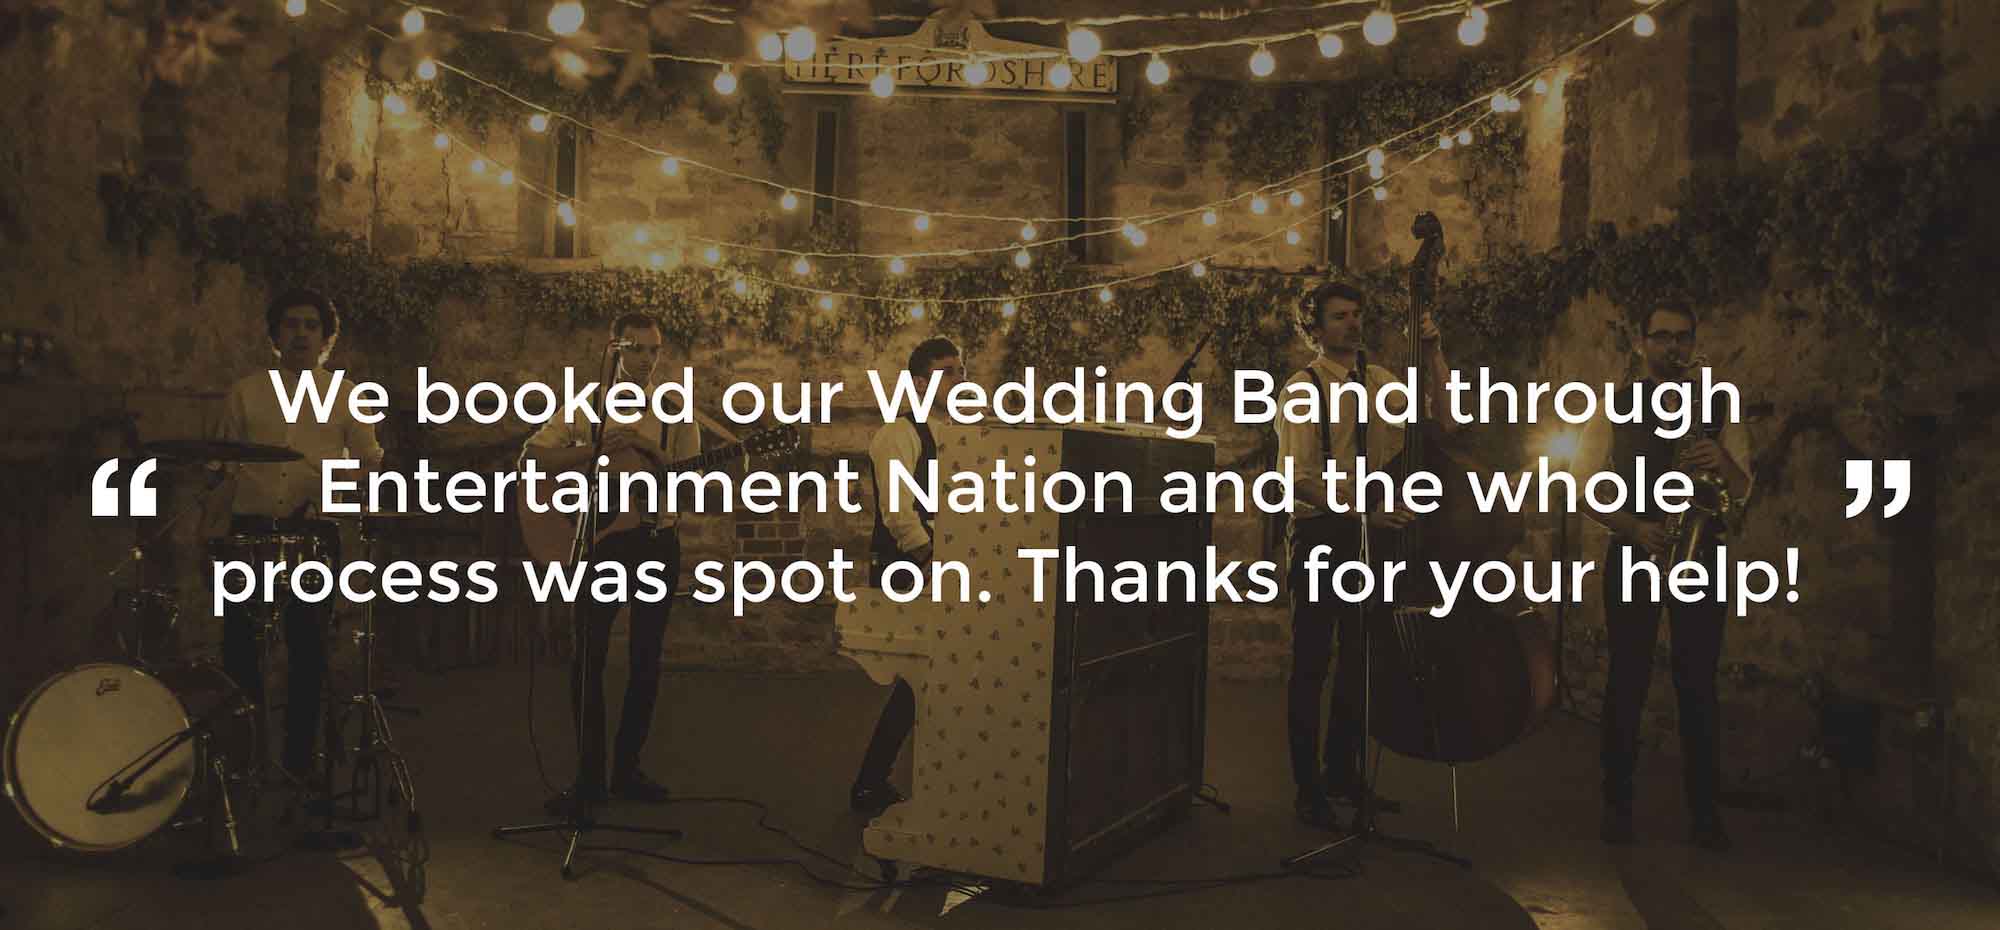 Hire Wedding Bands West Midlands Entertainment Nation